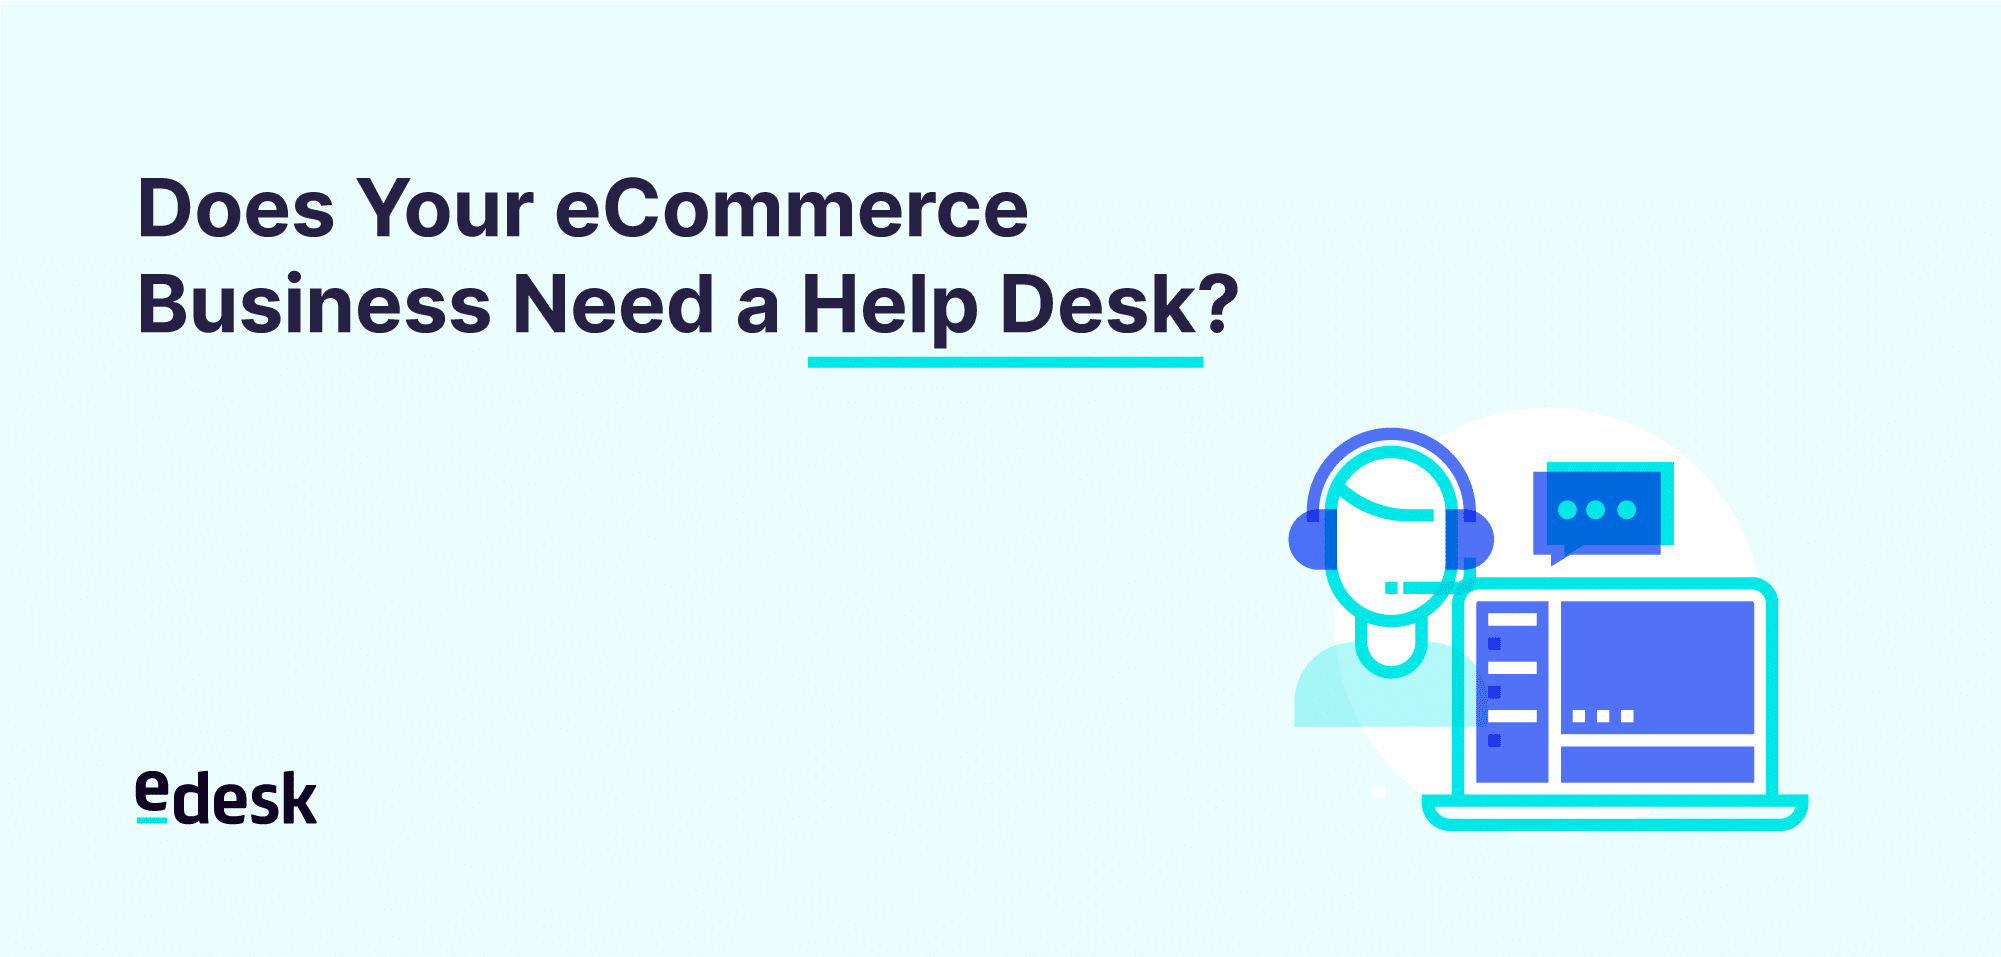 Need an eCommerce Help Desk